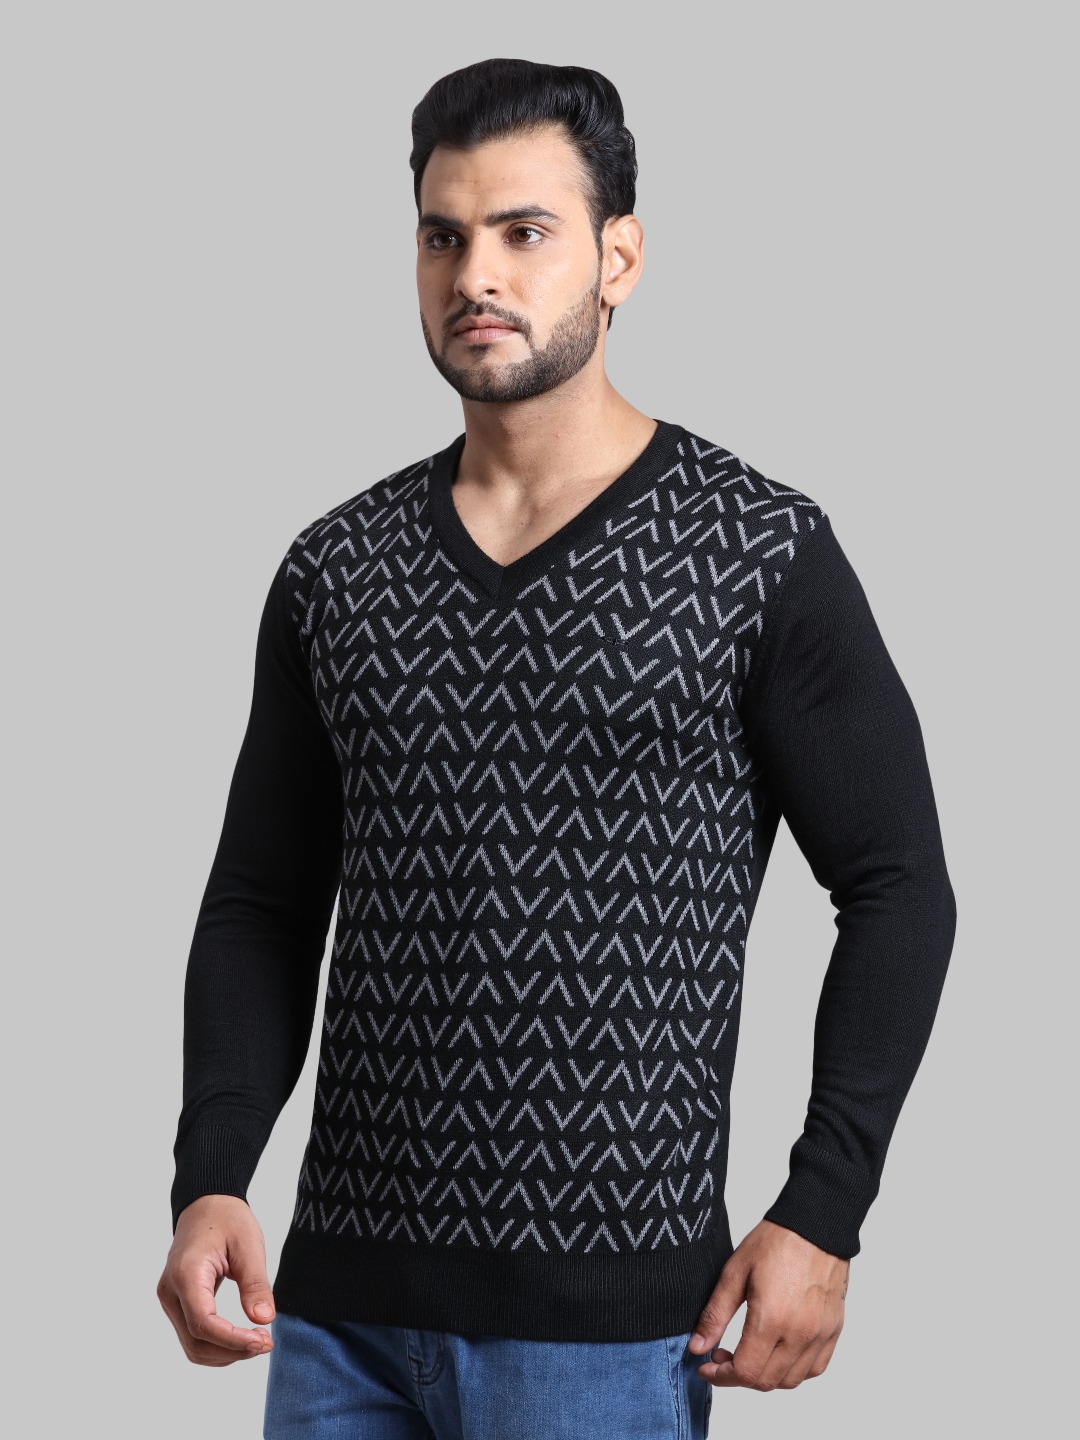 ColorPlus Black Sweater